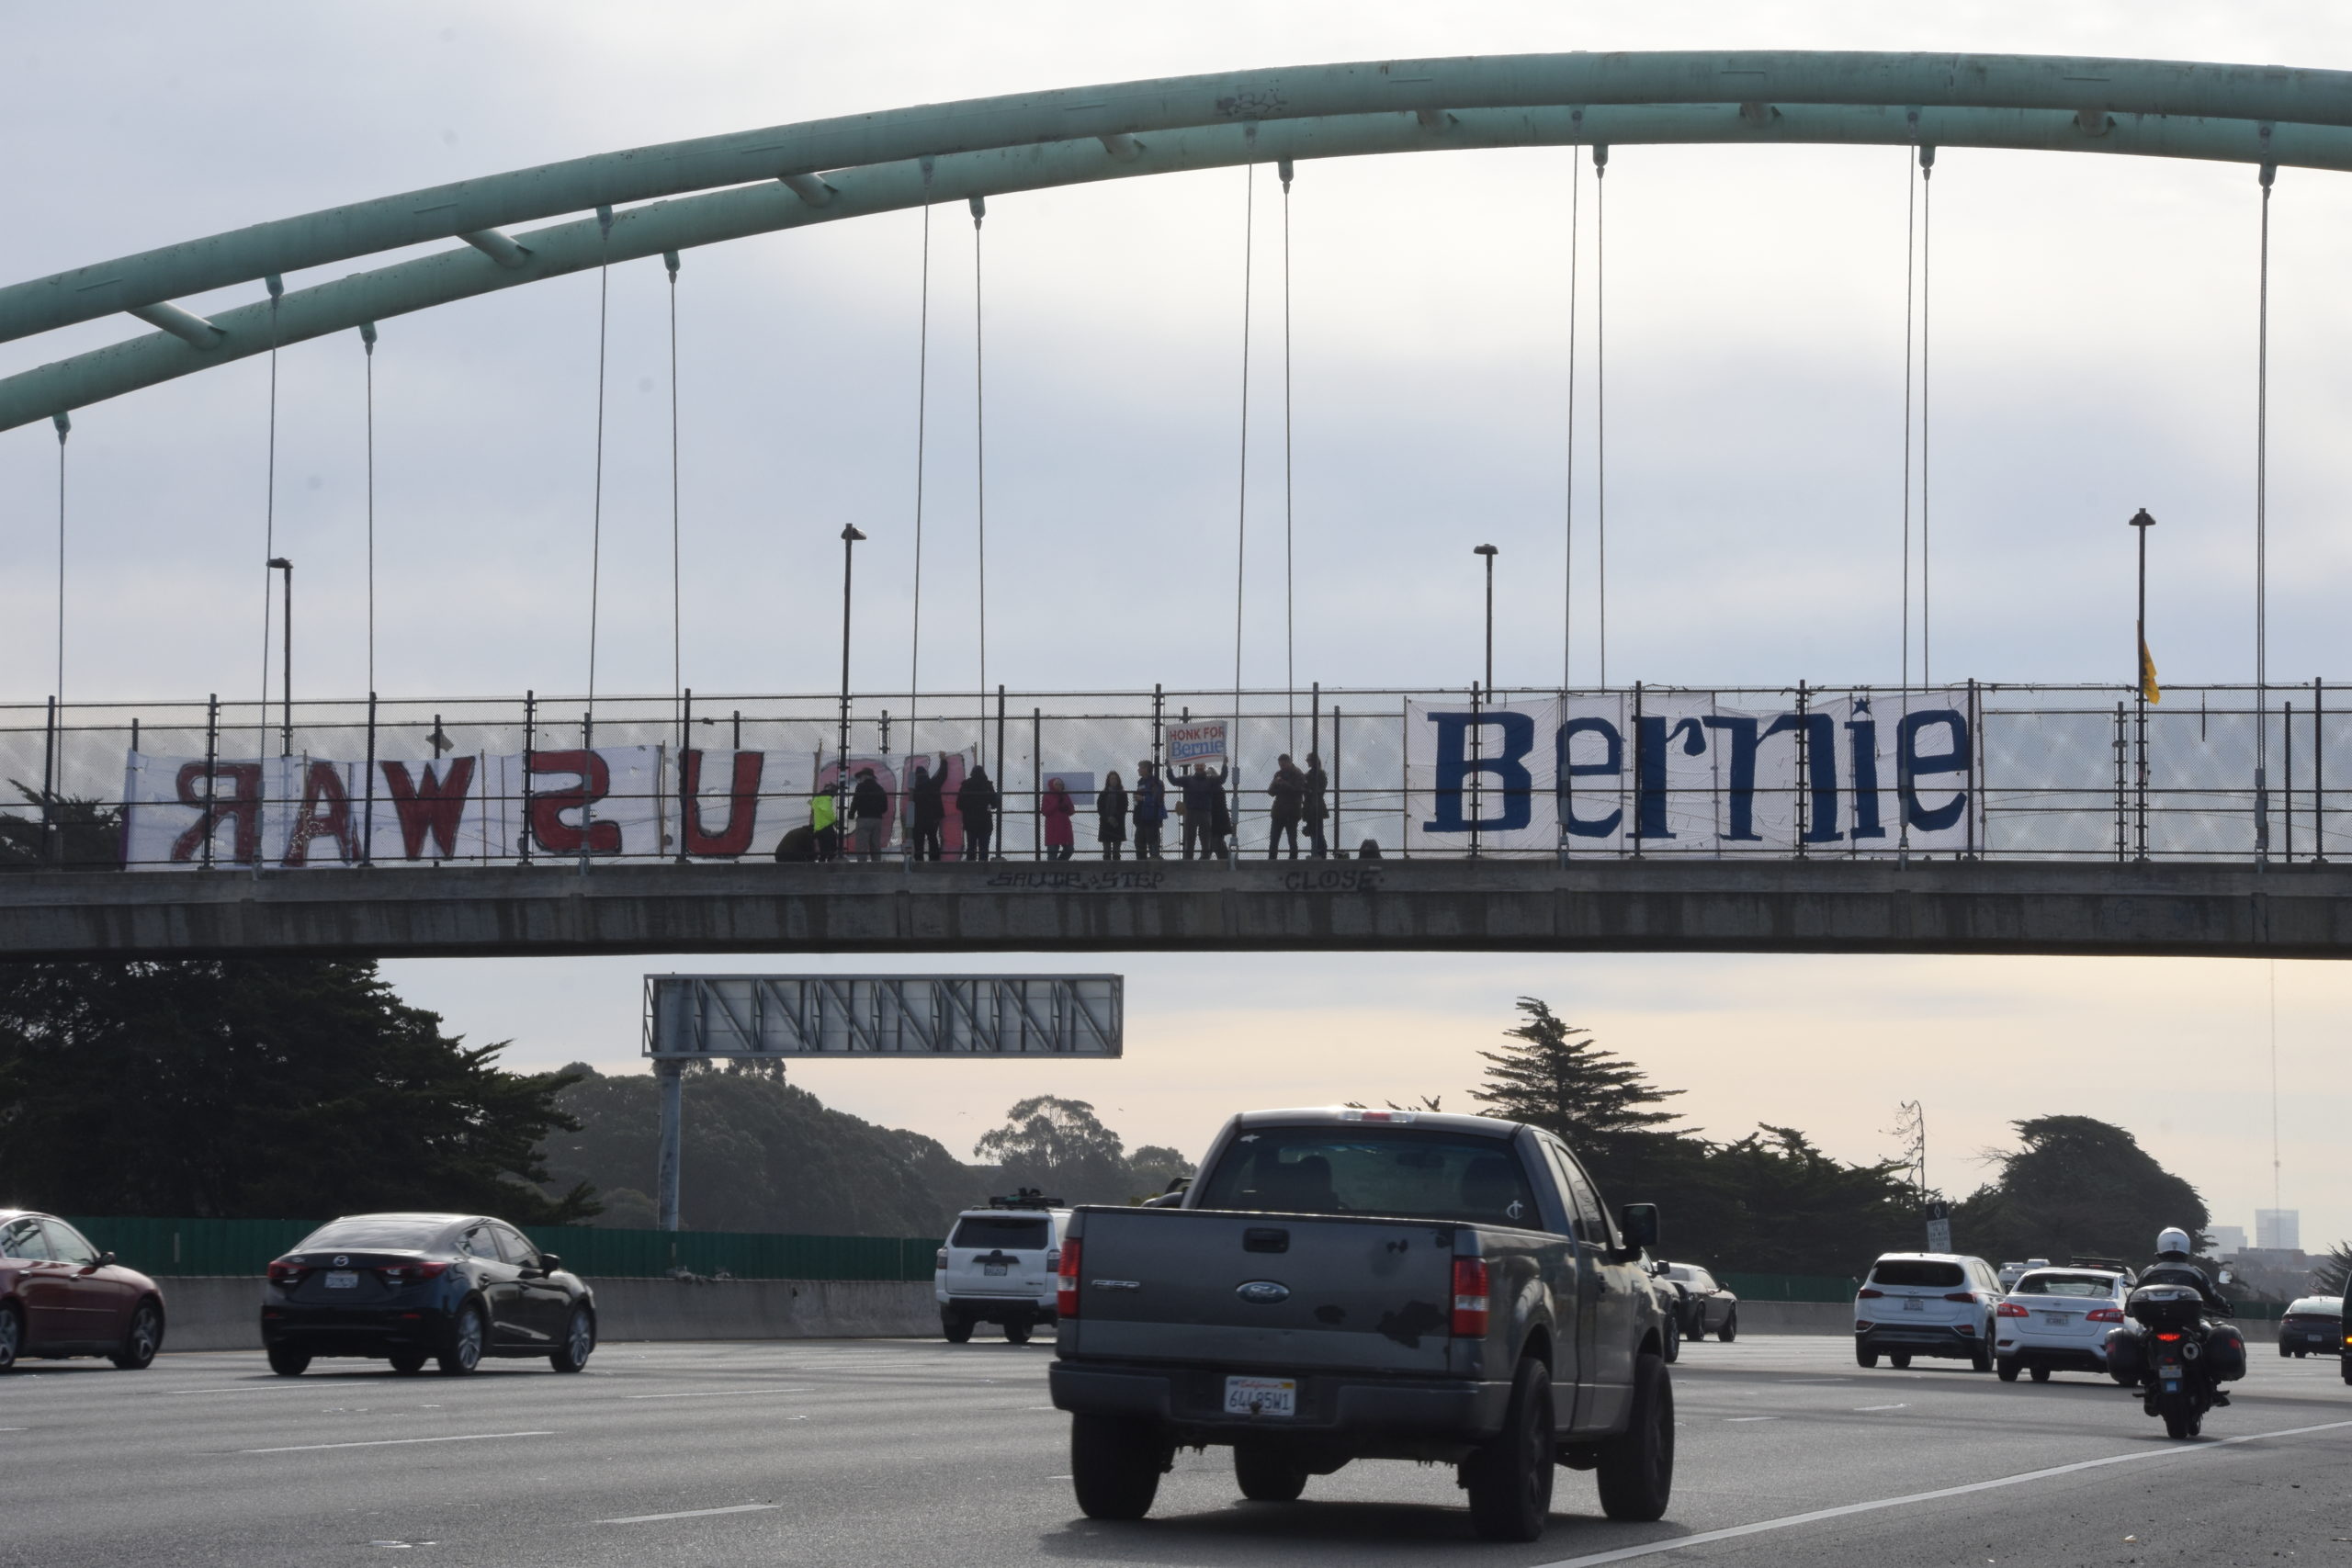 California Progressive Alliance Annual Meeting 2020 - Bannering for Bernie